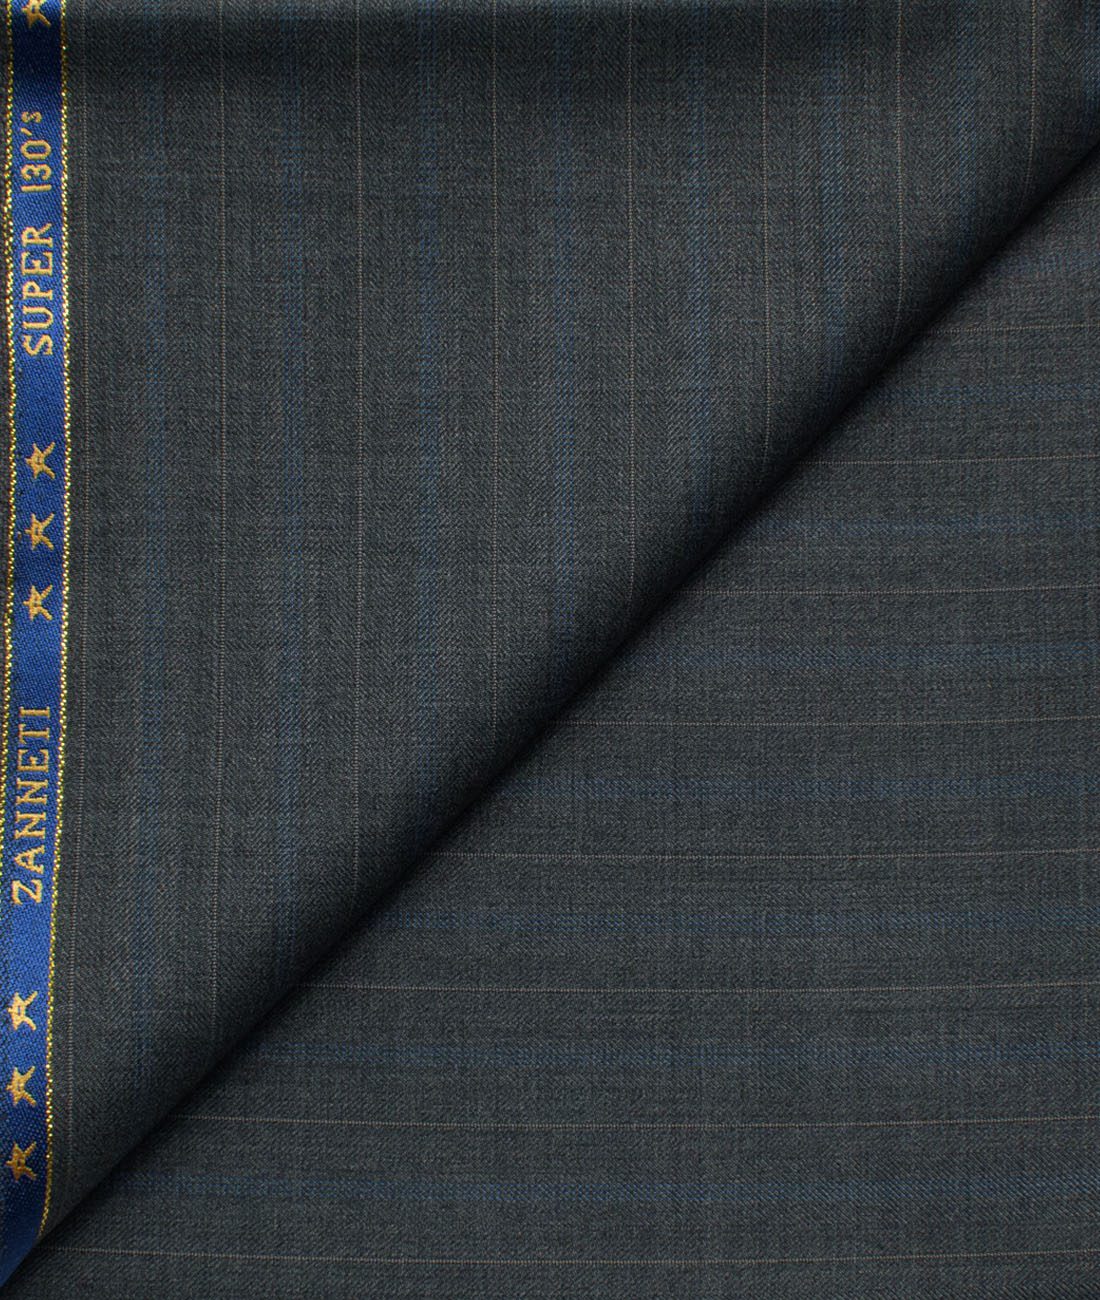 BKRKJ Men's Cotton Feel Poly Viscose Unstitched Trouser Fabric - 1.2 Meters  For formal wear officer rank